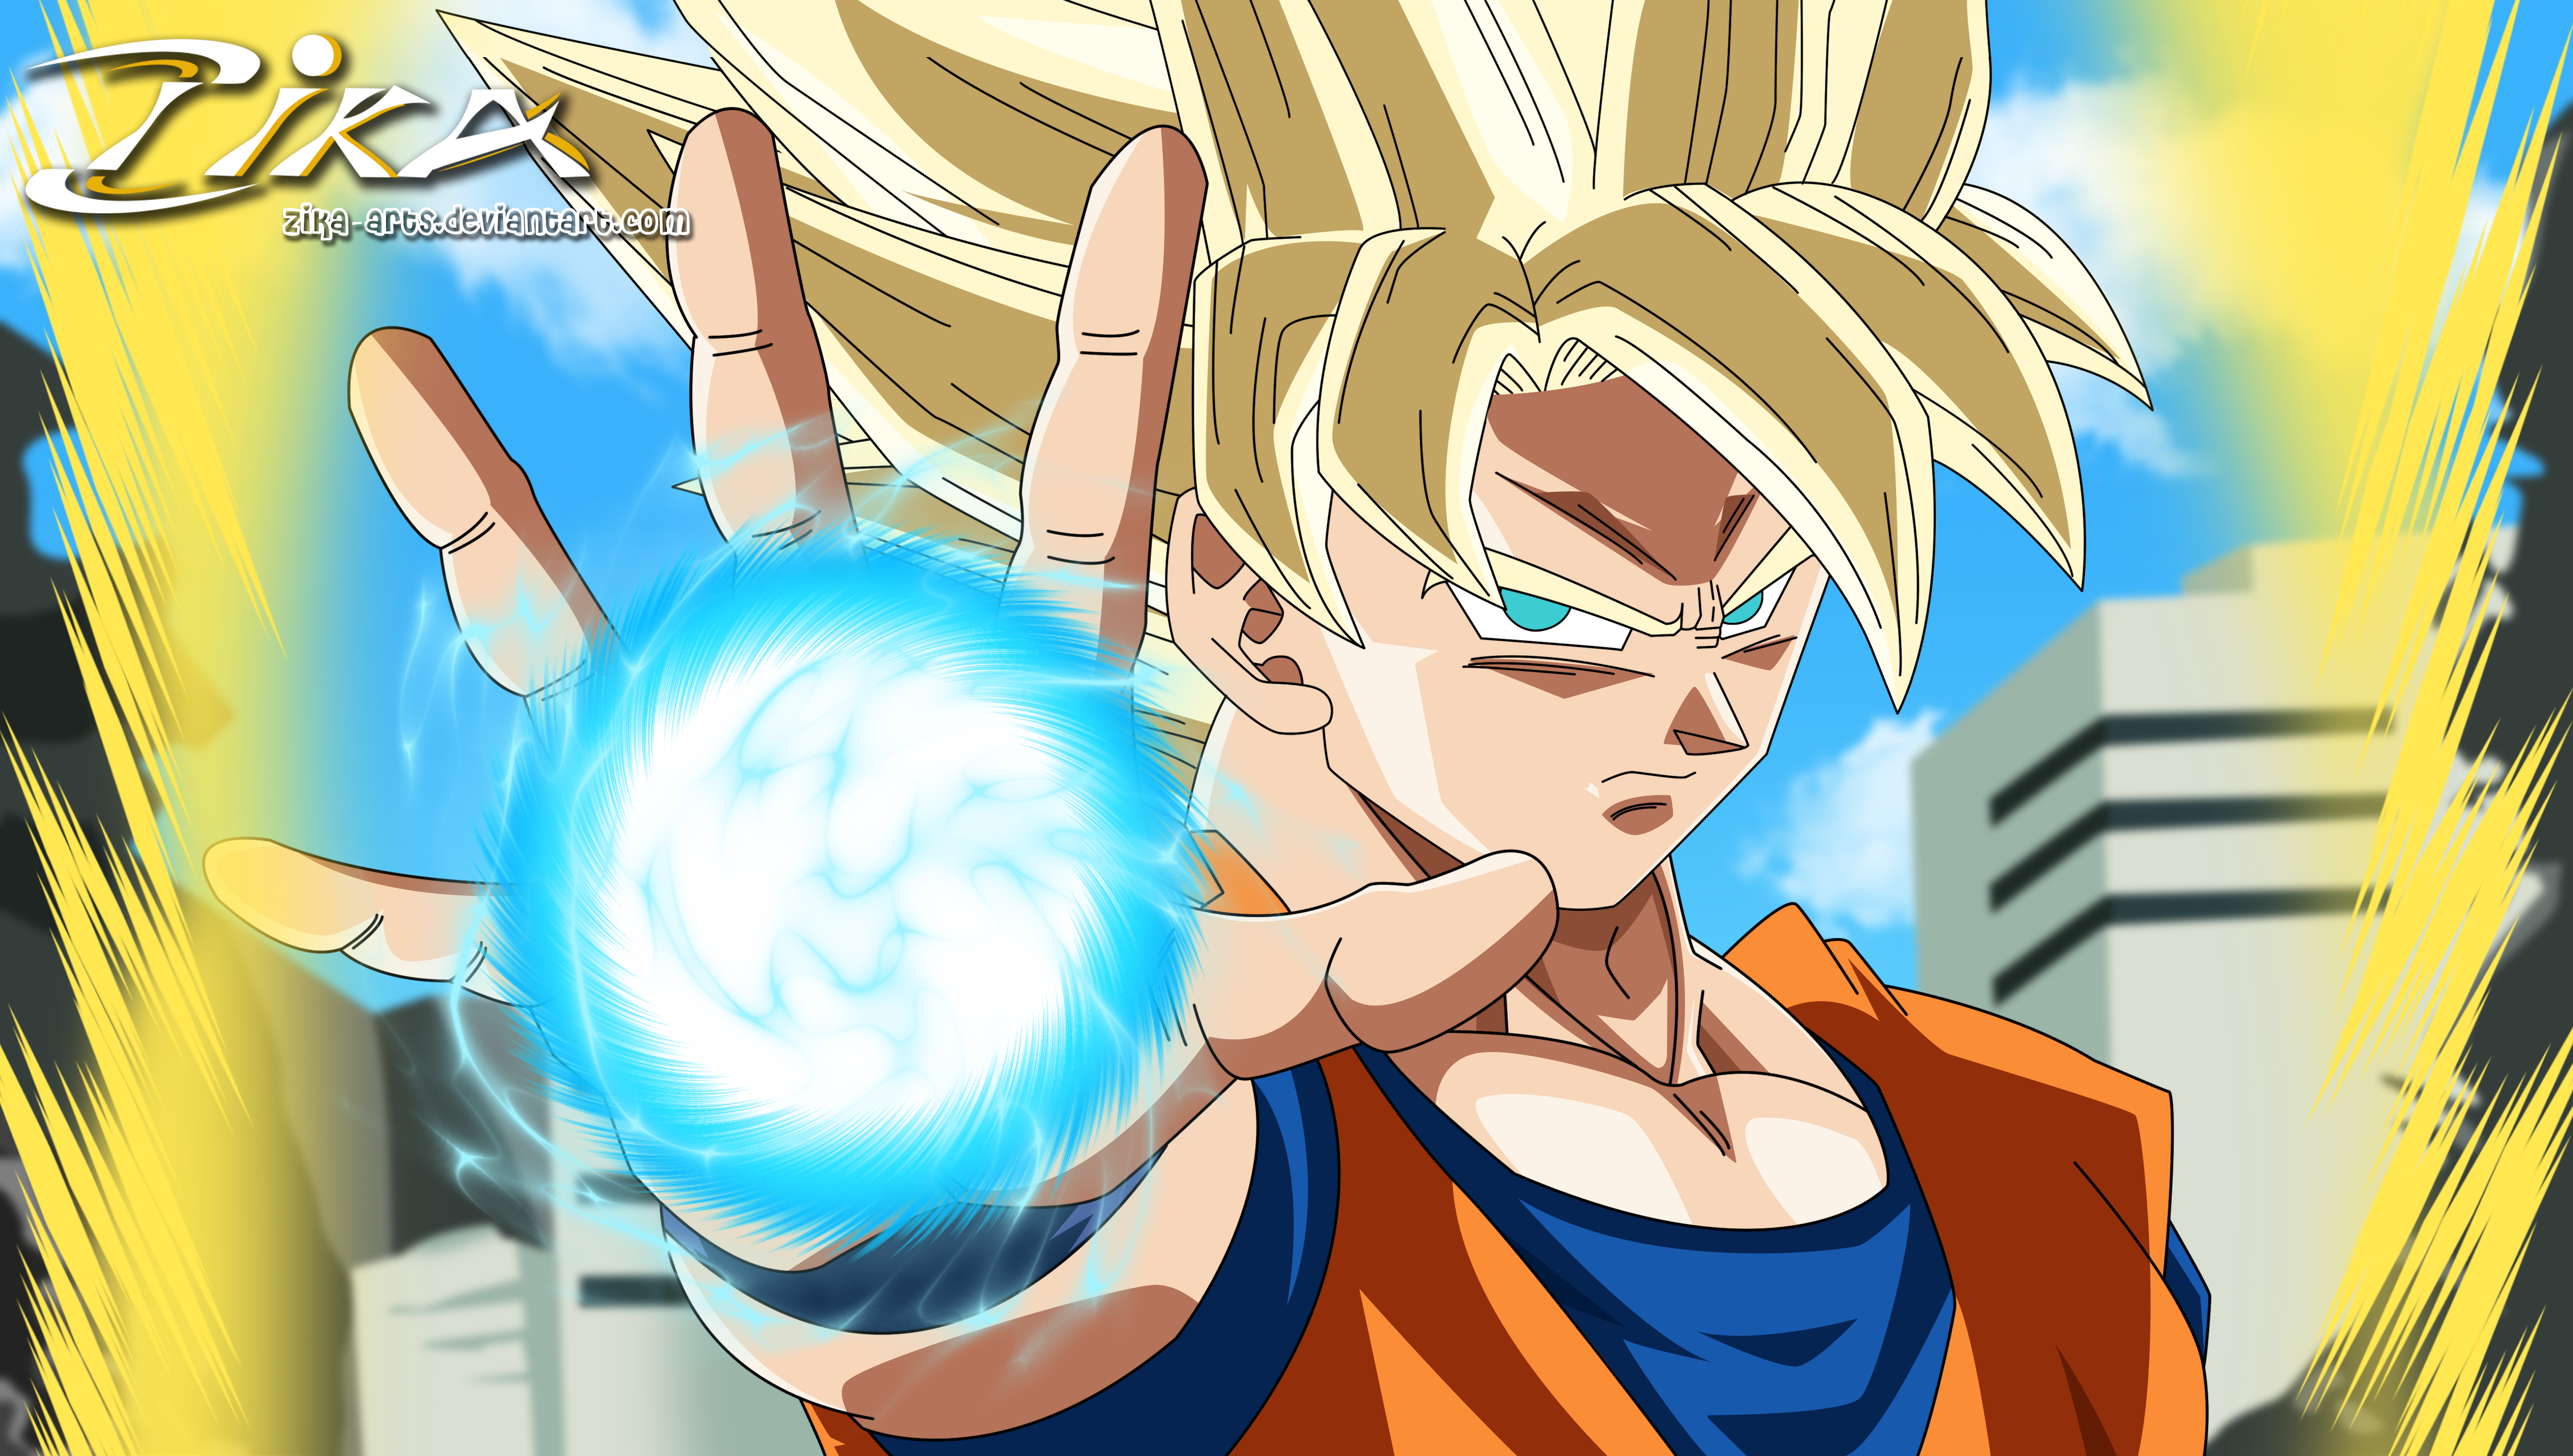 Goku Ki Blast by zika-arts on DeviantArt